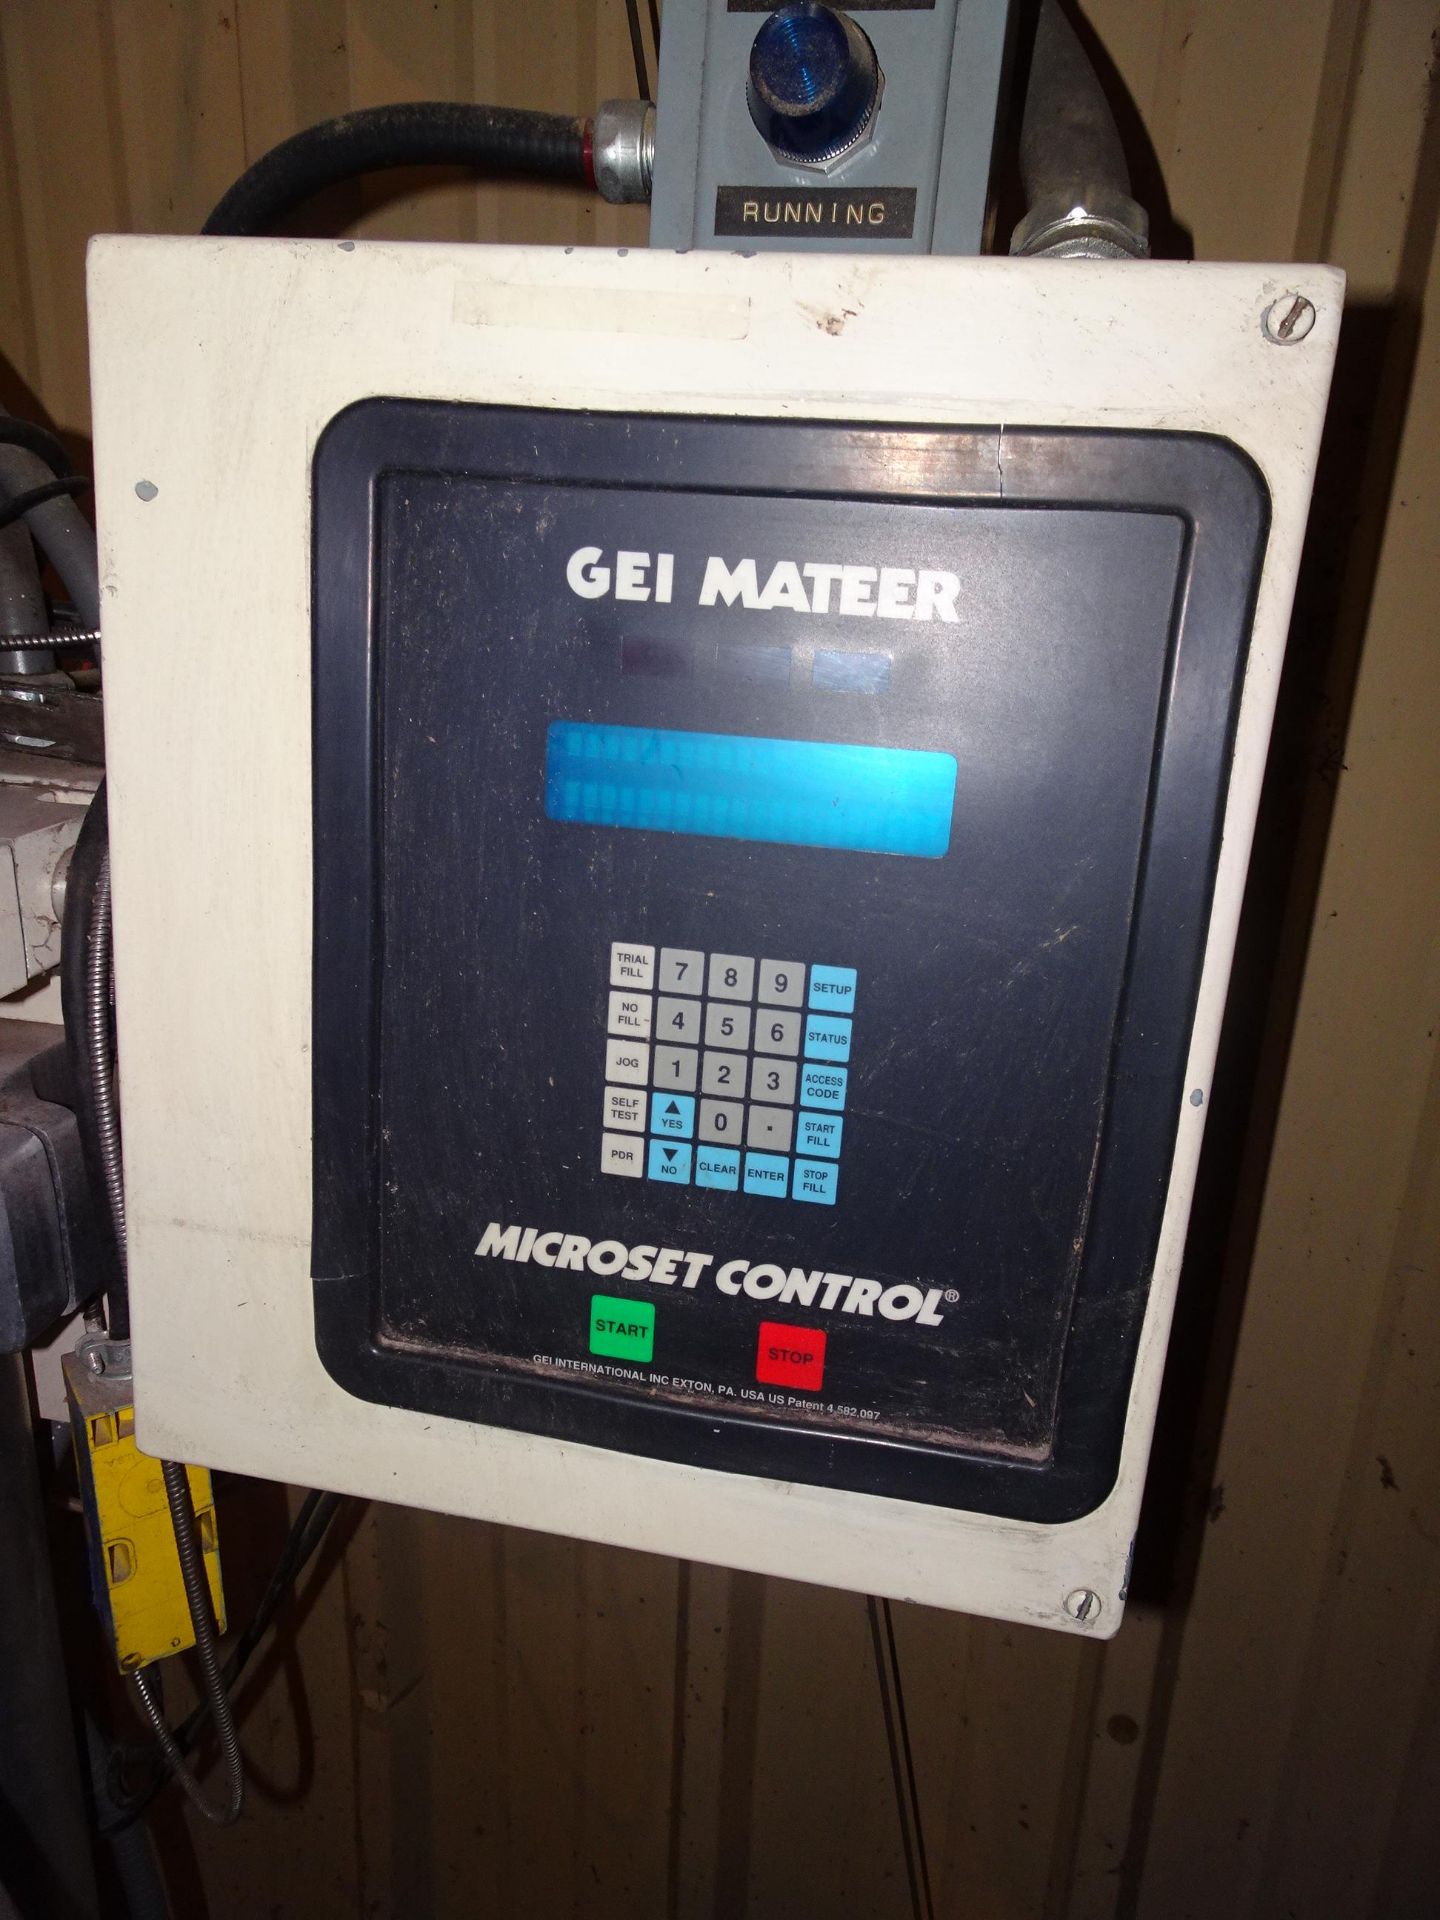 Mateer Neotron System Model 1000 Powder Filler with GEI Mateer Microset Digital Controller sn - Image 2 of 6